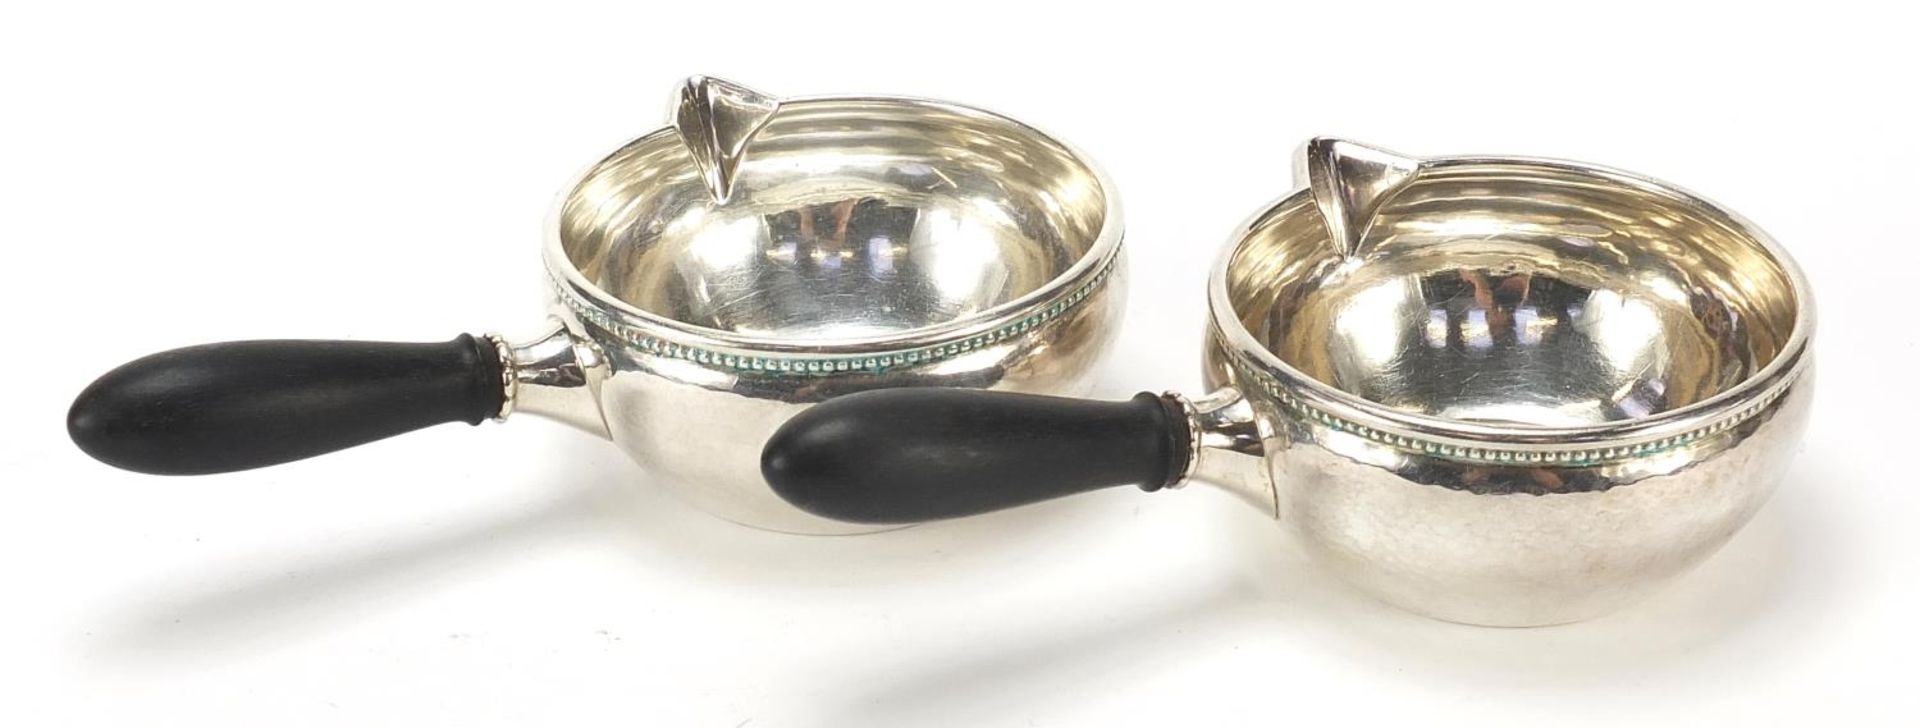 Georg Jensen, pair of Danish 925S silver porringers with ebony handles, 16.5cm in length, 304.0g - Image 2 of 3